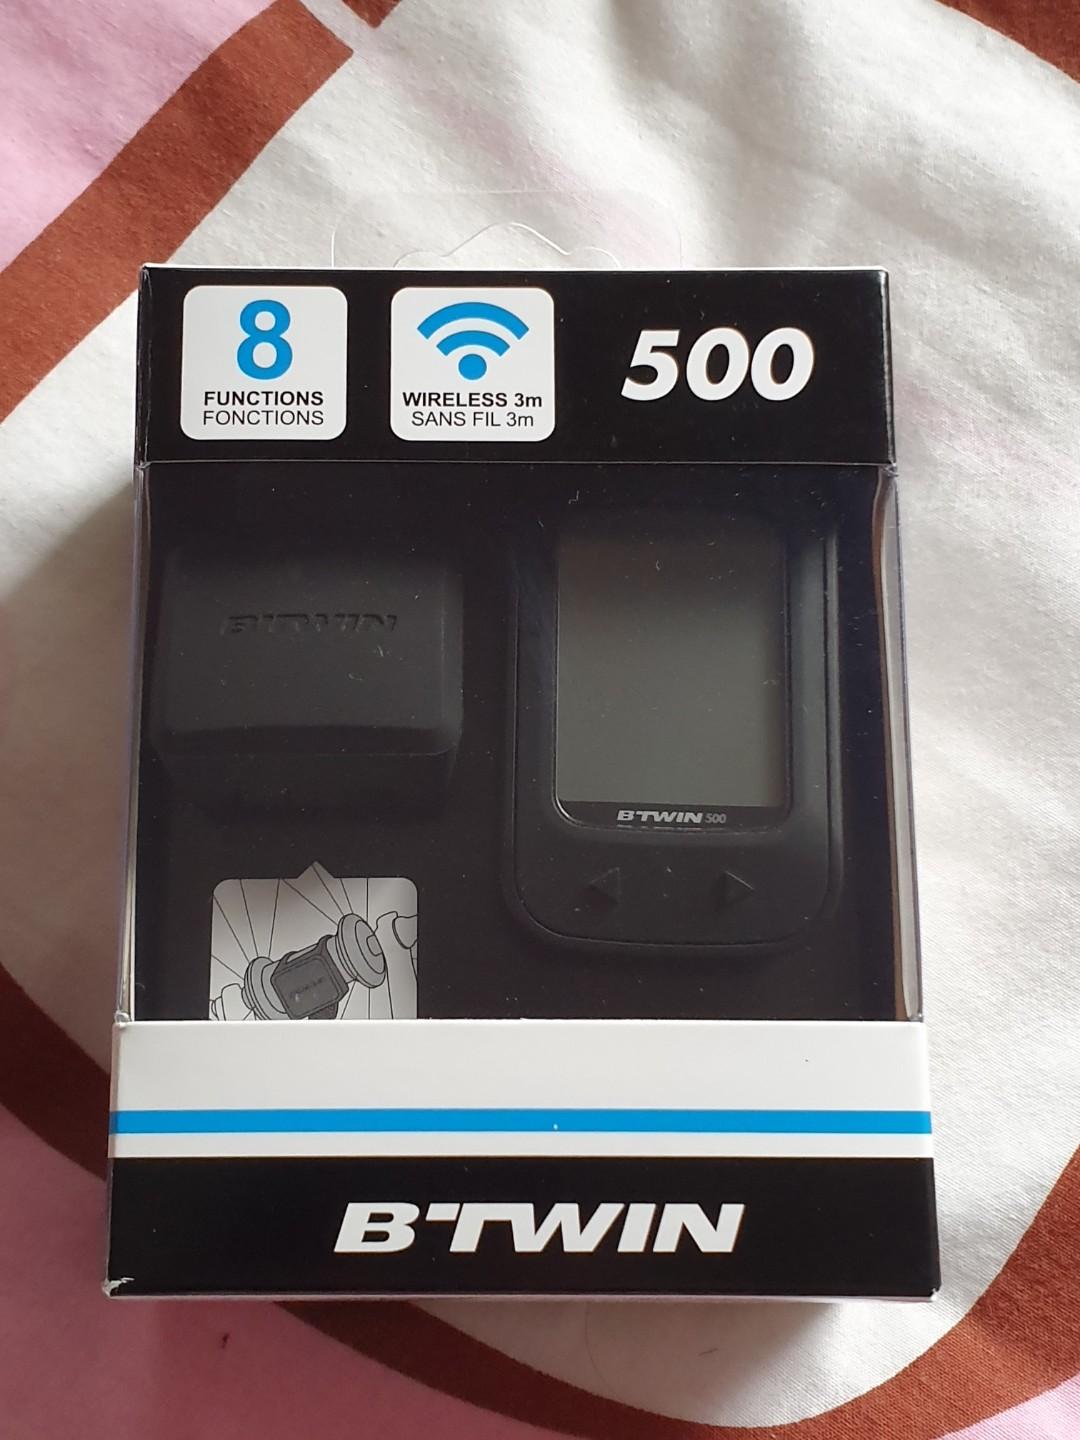 btwin 500 wireless cyclometer